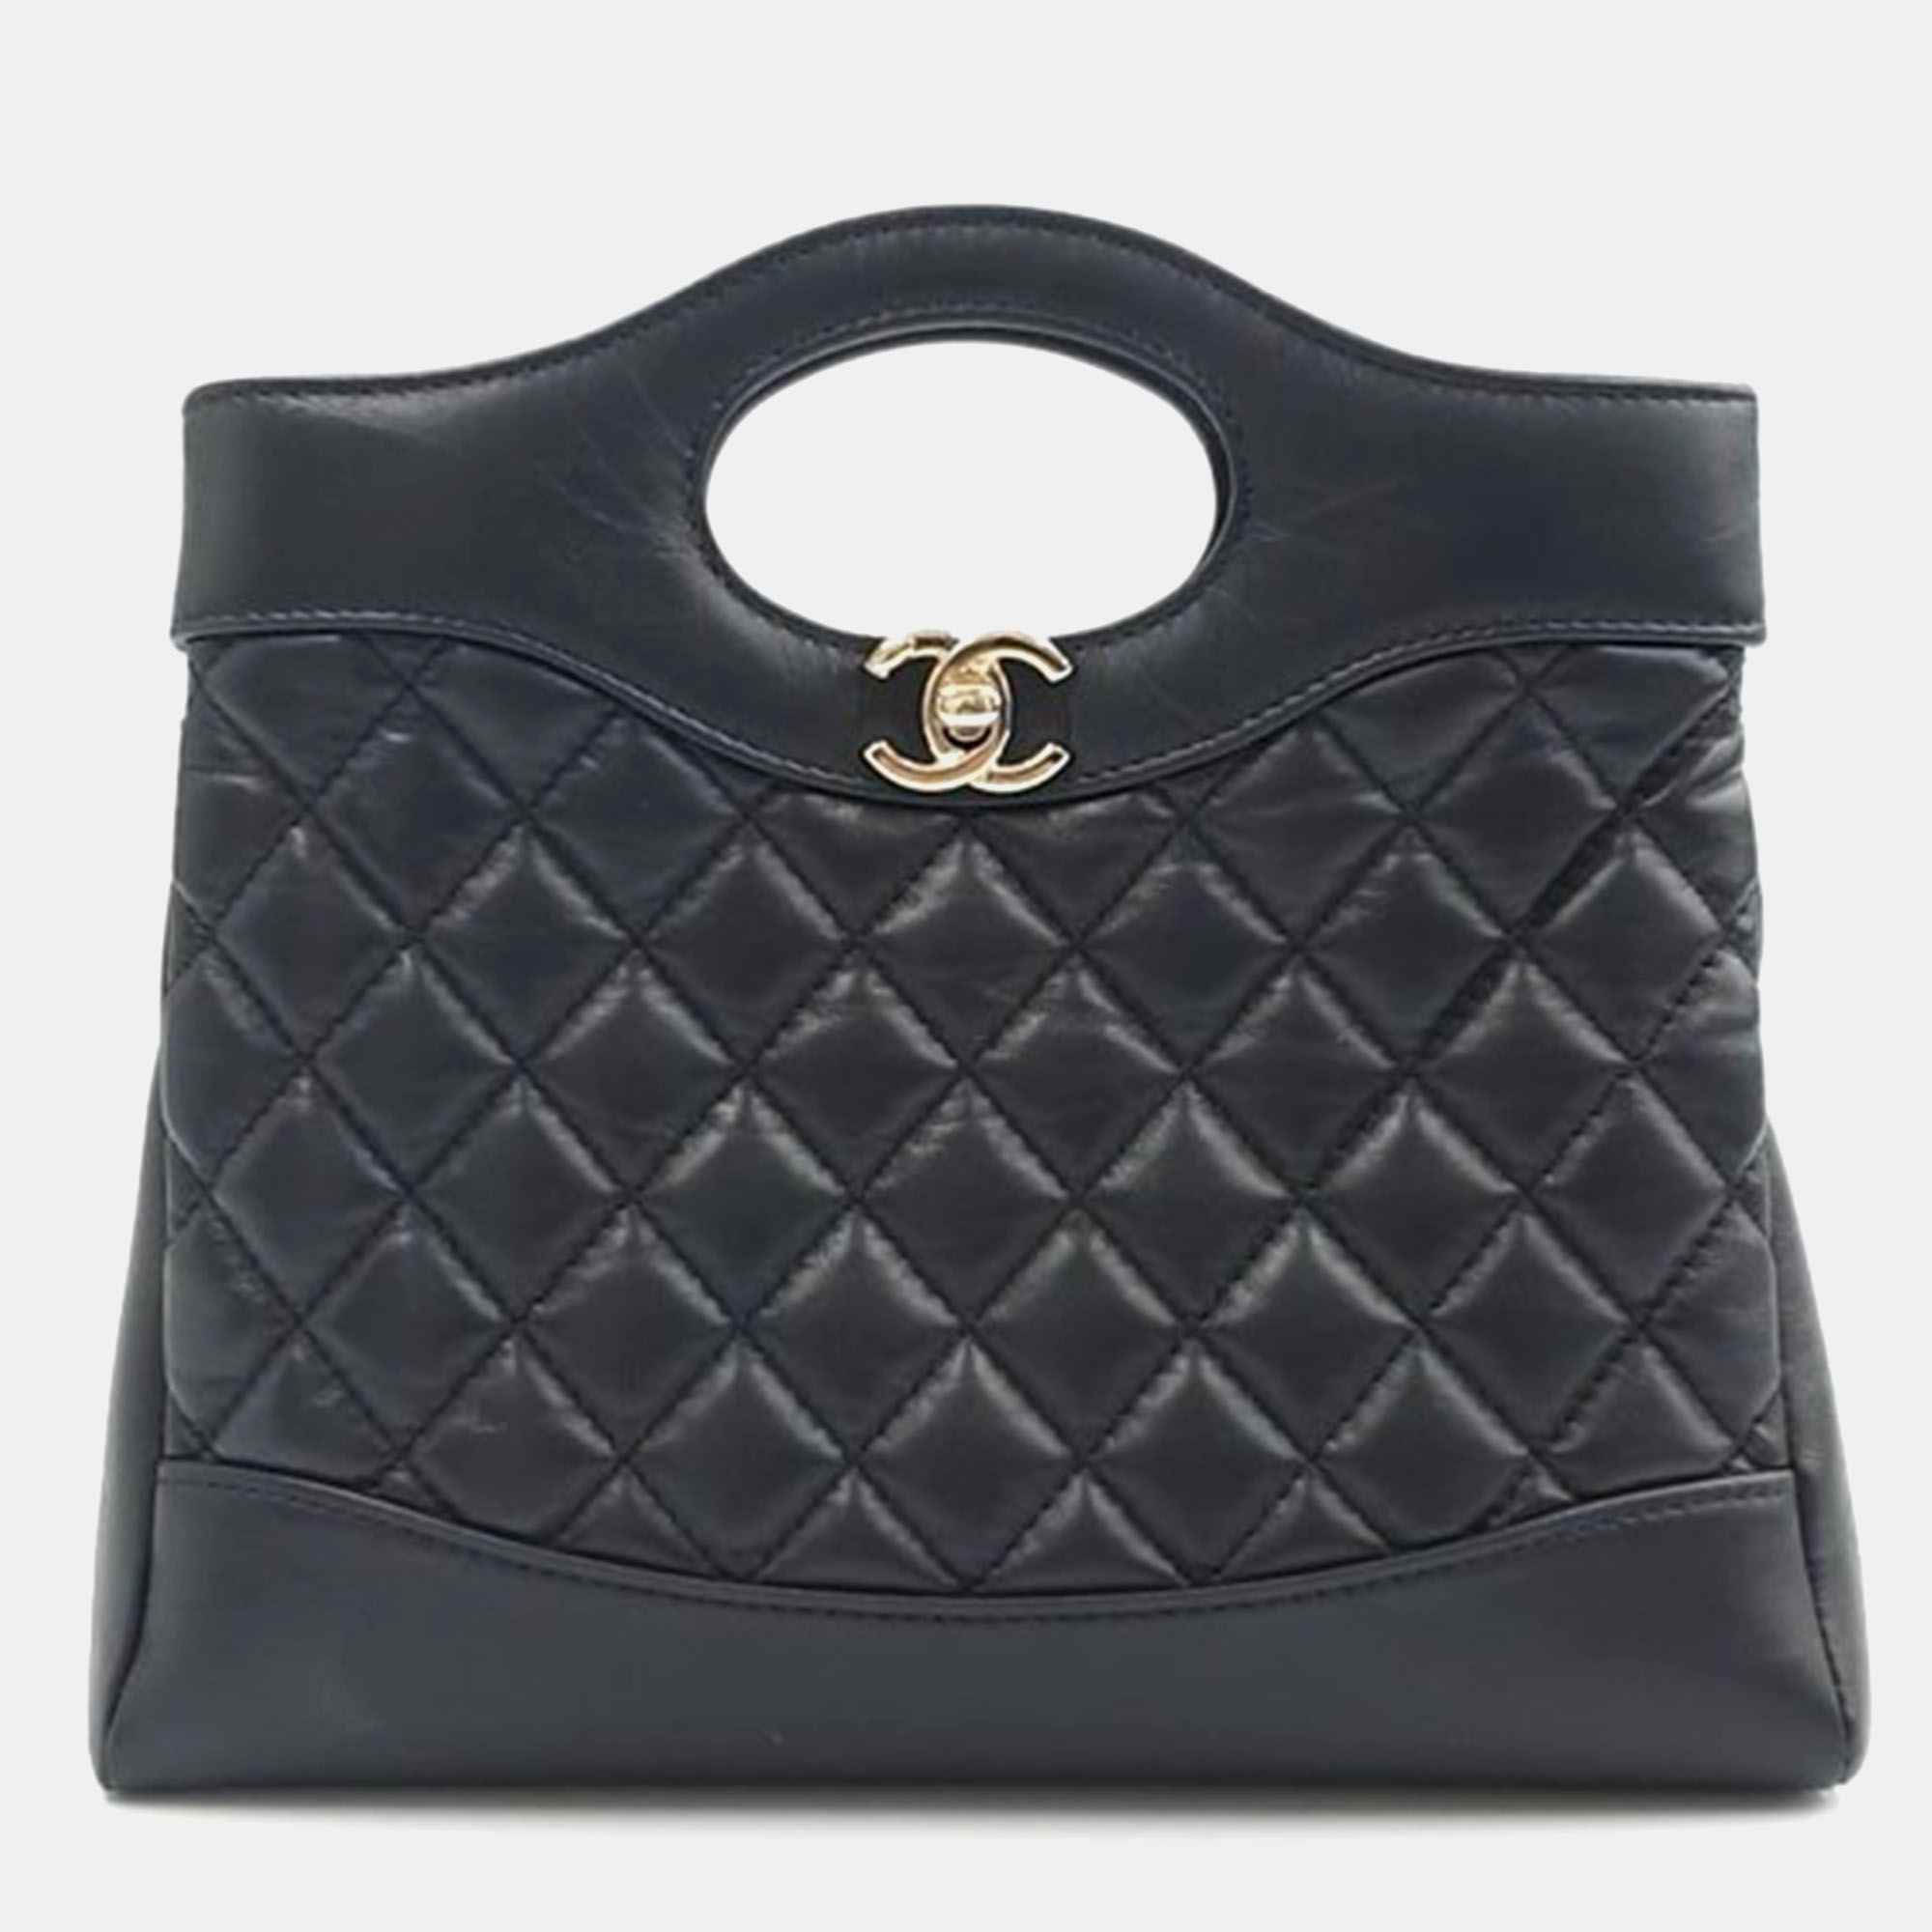 Chanel black leather 31 shopping mini bag